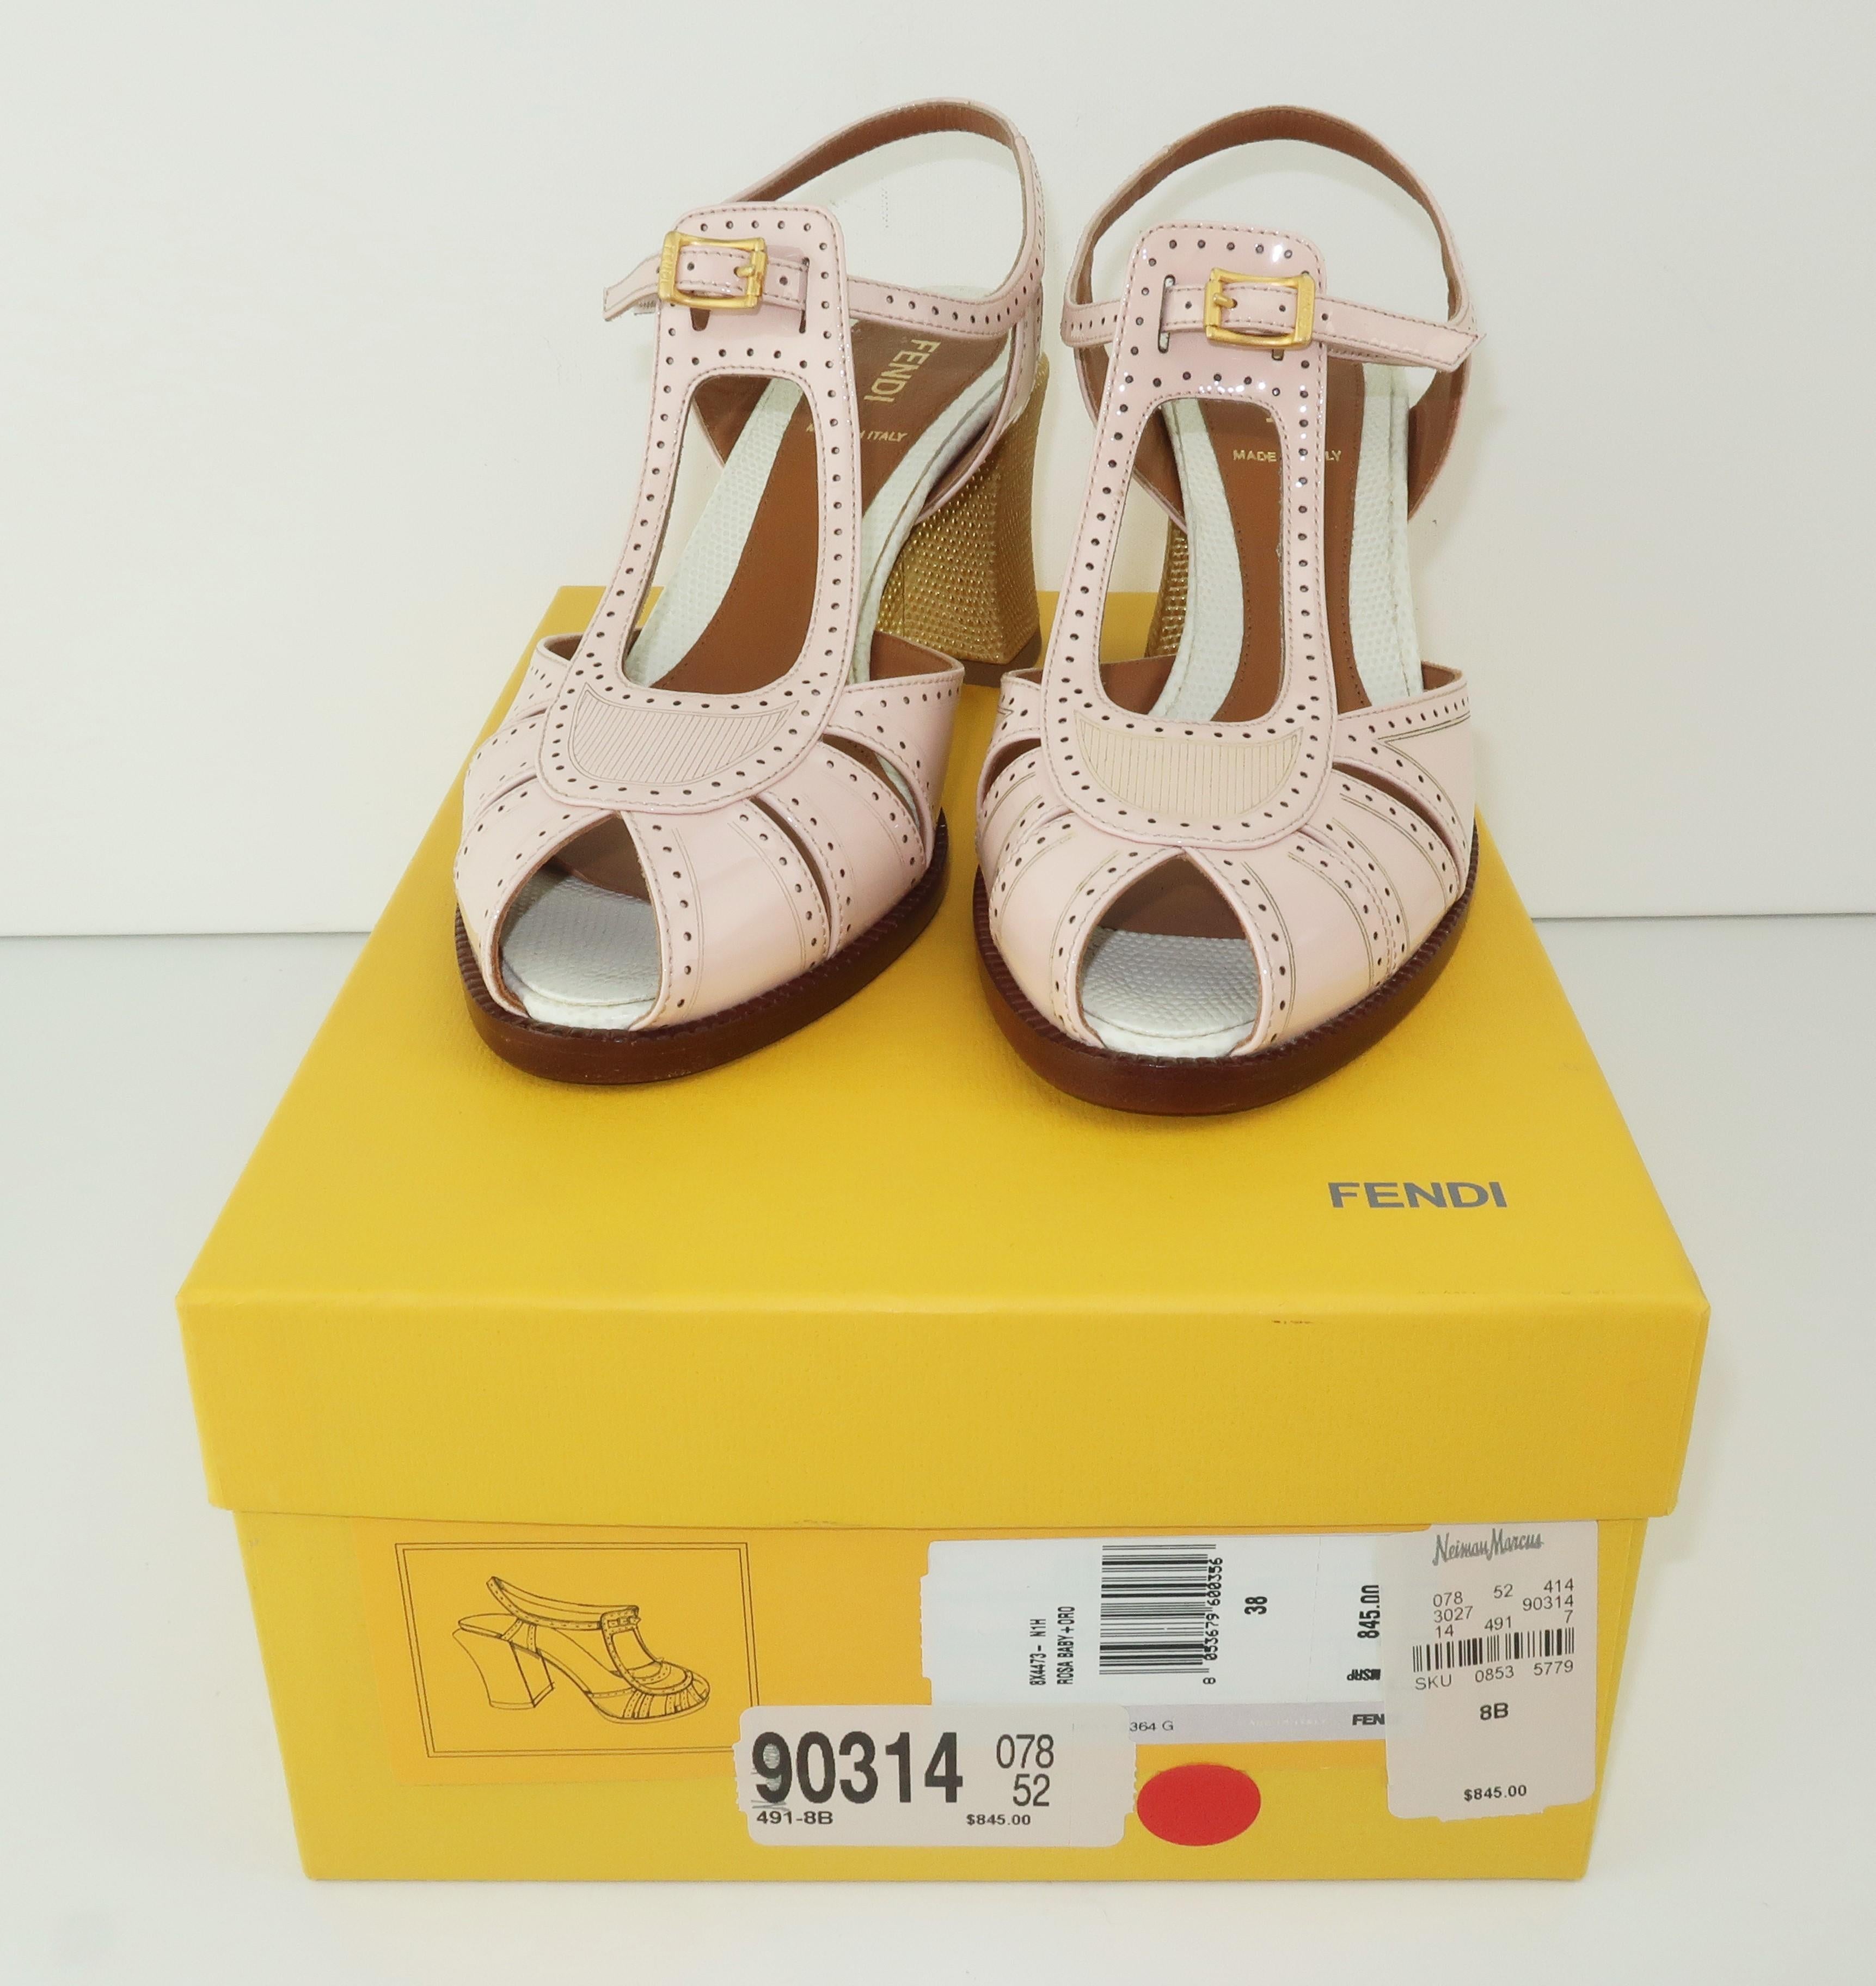 Fendi Pink Patent Leather Spectator Style Shoes Sz 38 5